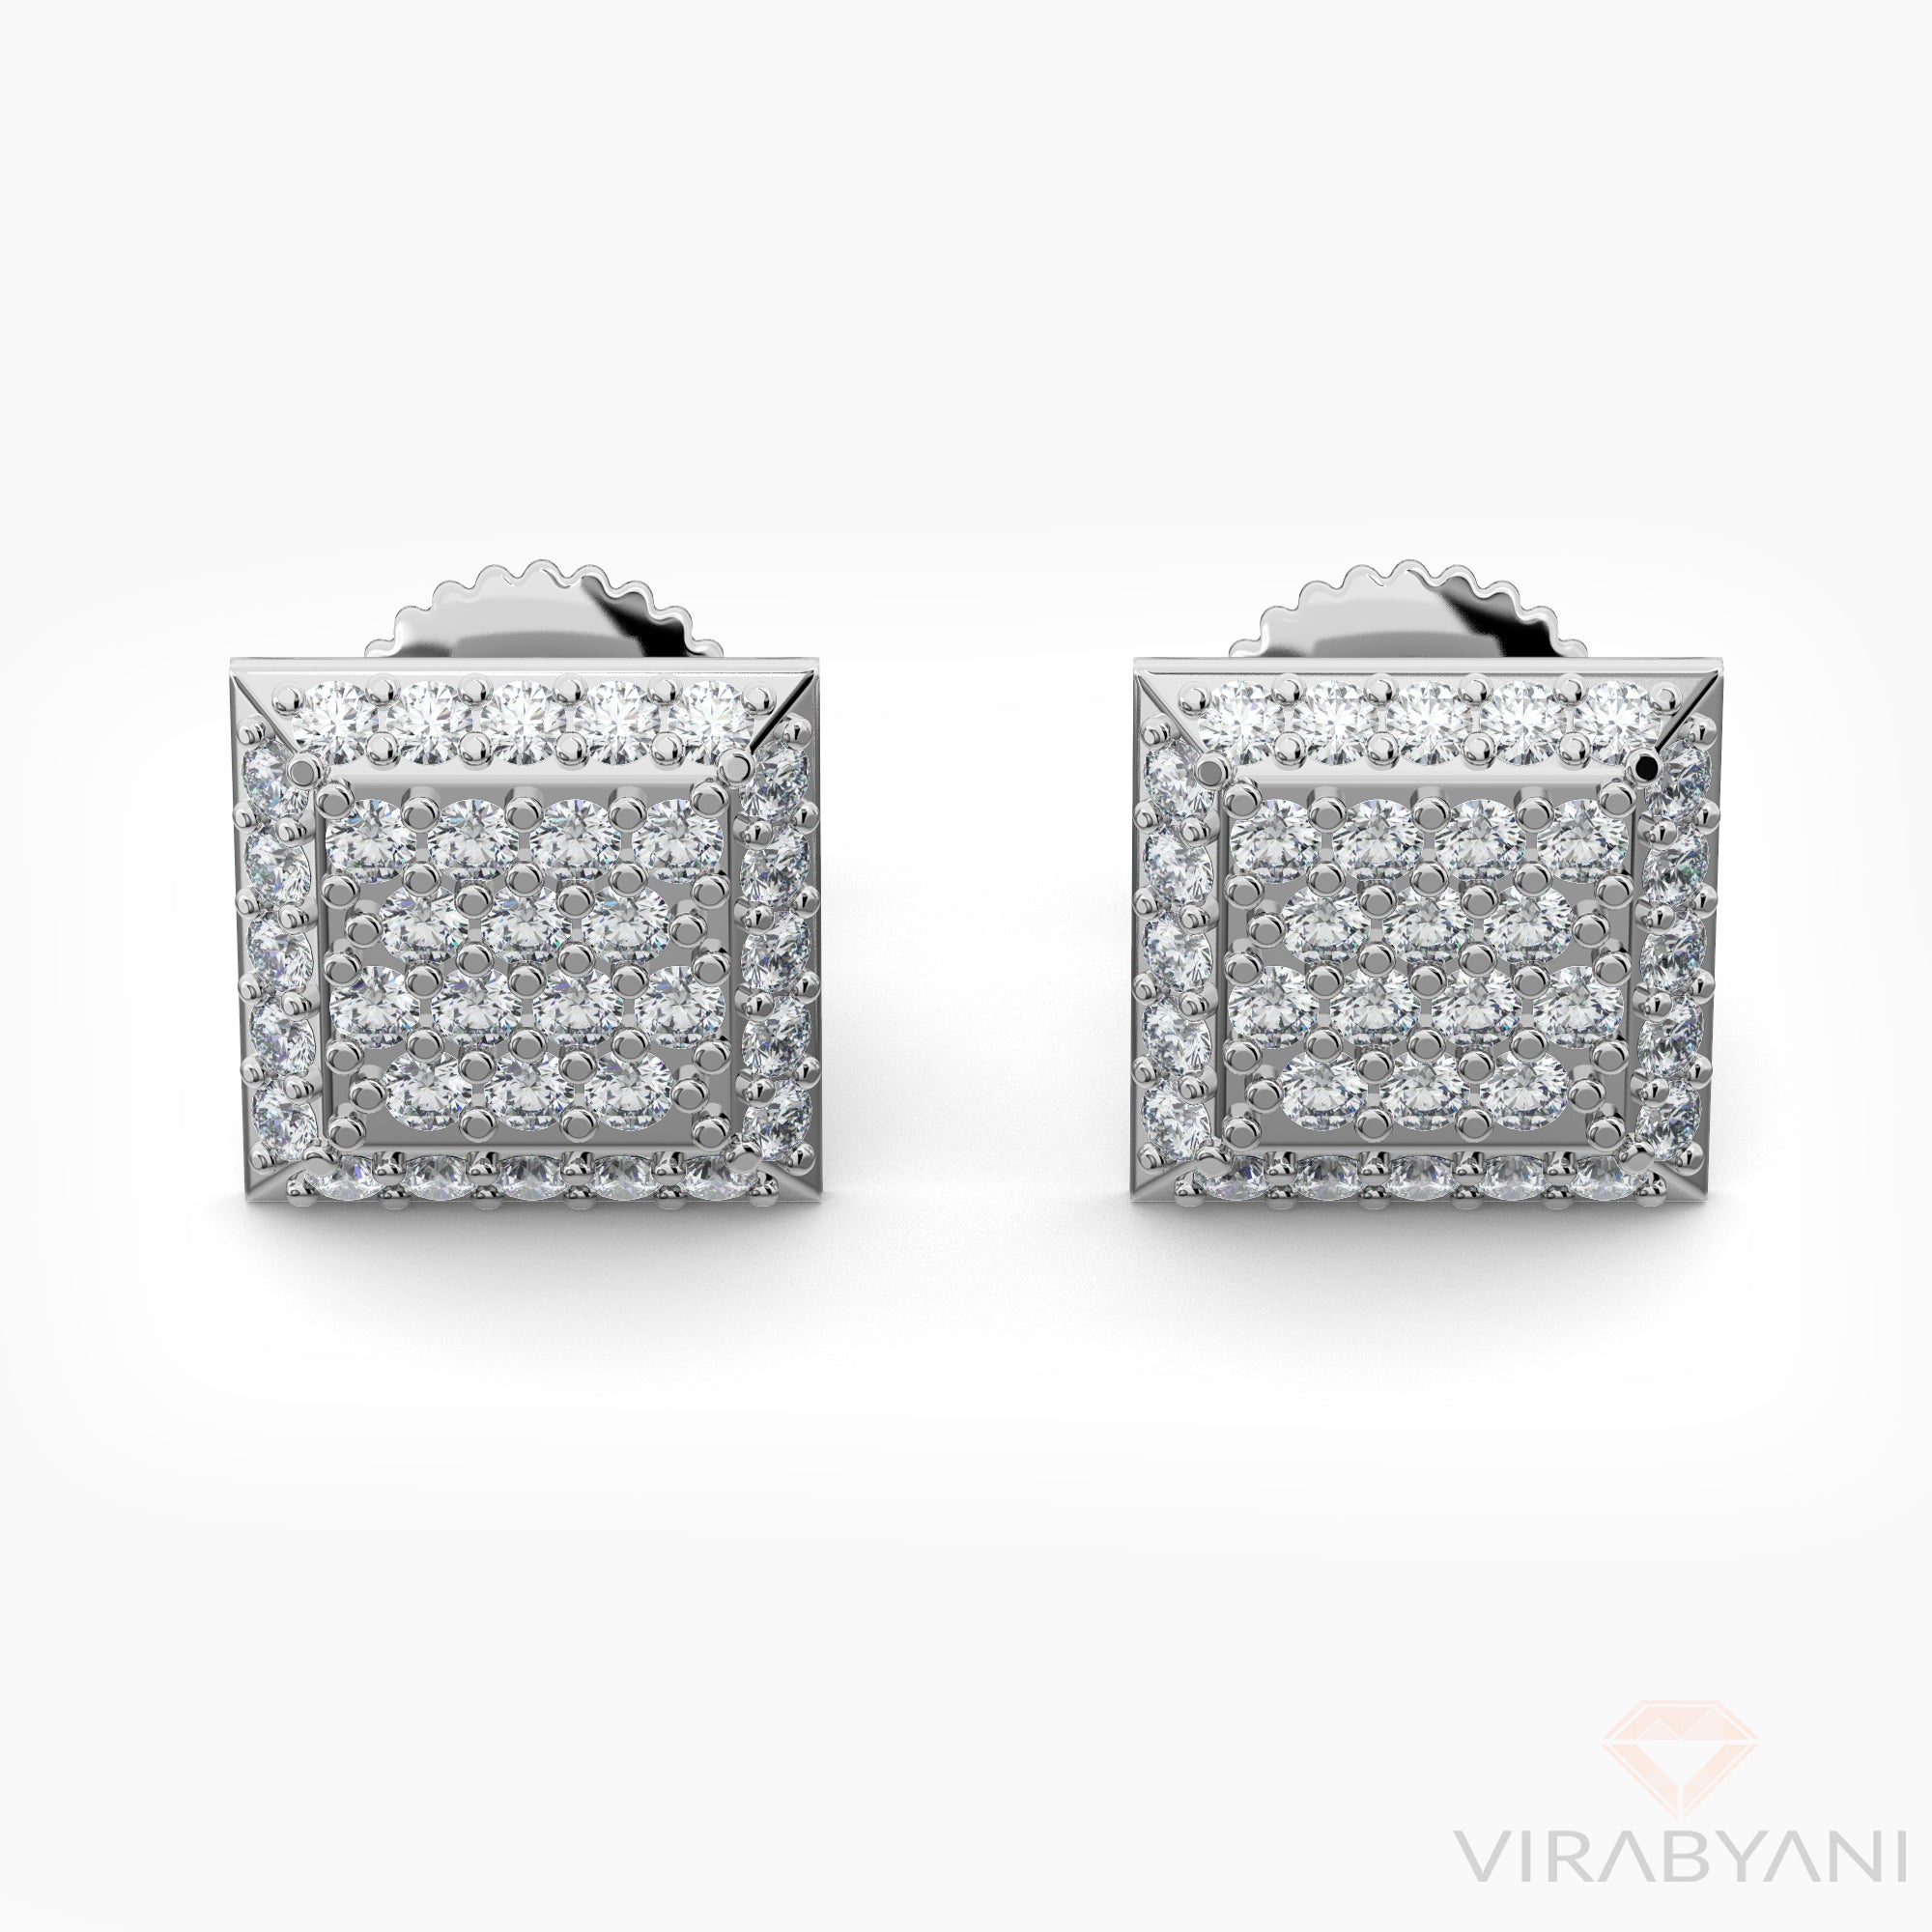 Square Shaped AMoré Pavé Stud Earrings With 0.54 ct. Diamonds